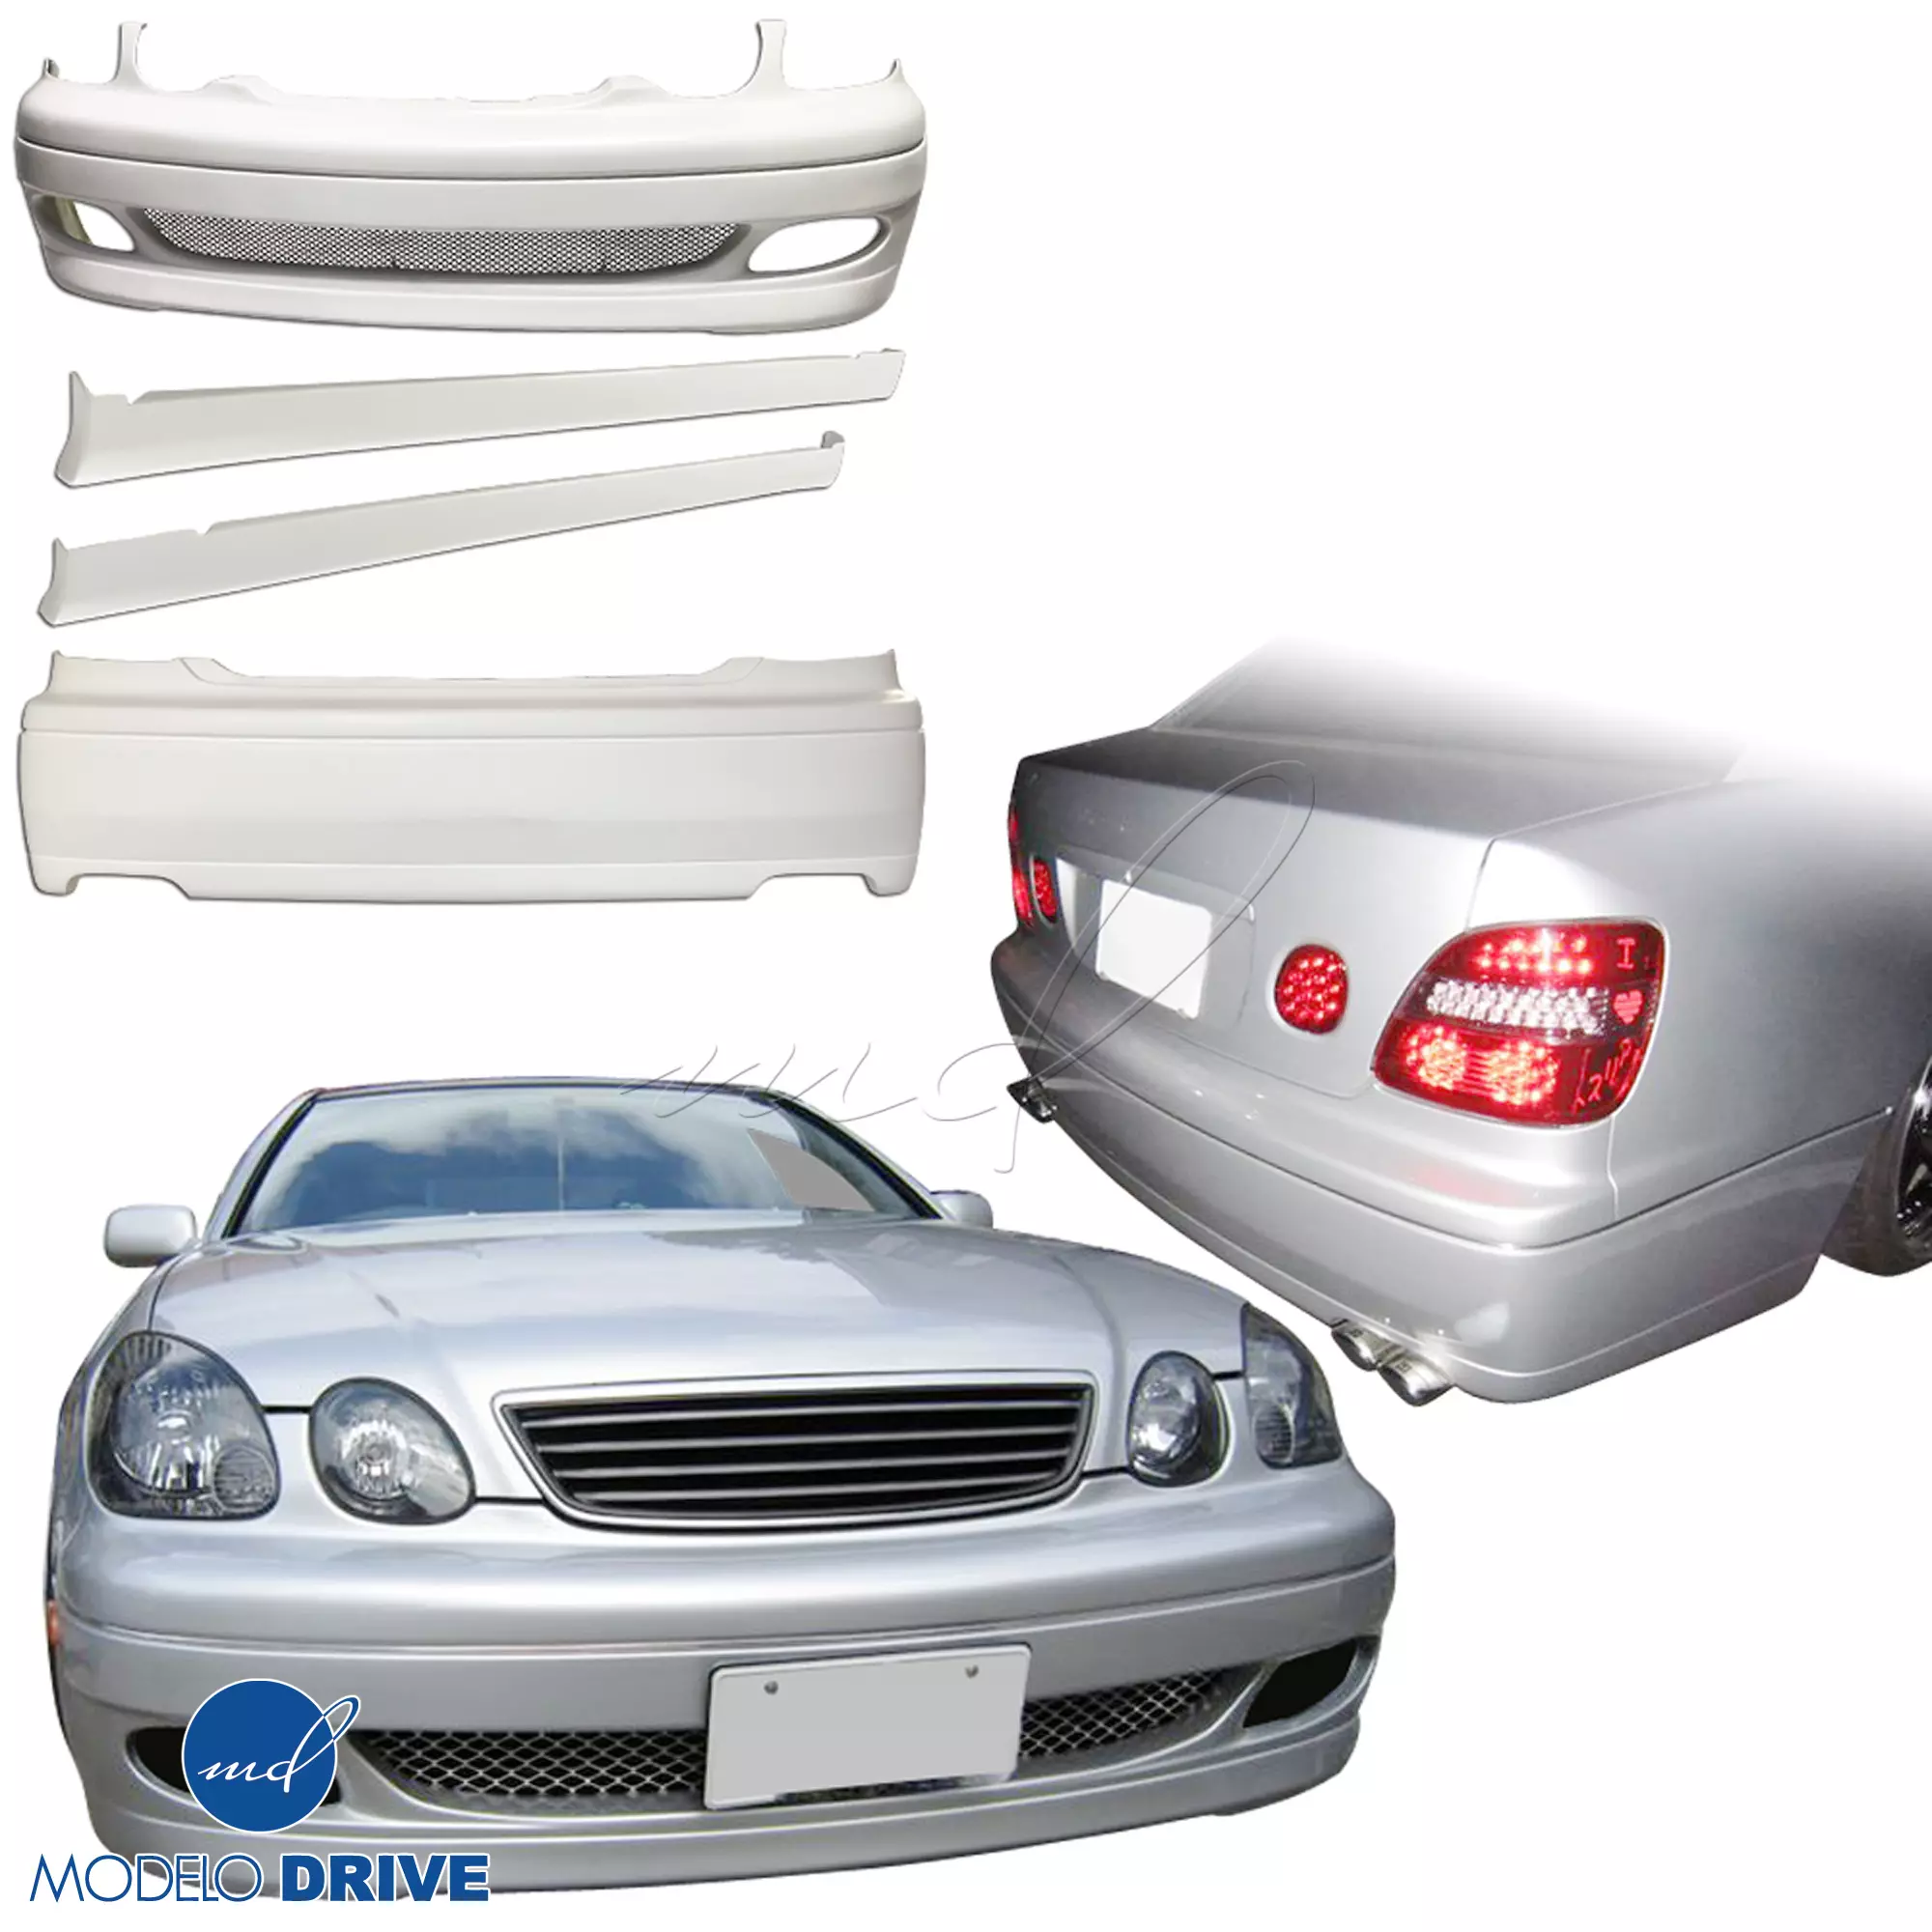 ModeloDrive FRP JUNT Body Kit 4pc > Lexus GS Series GS400 GS300 1998-2005 - Image 2